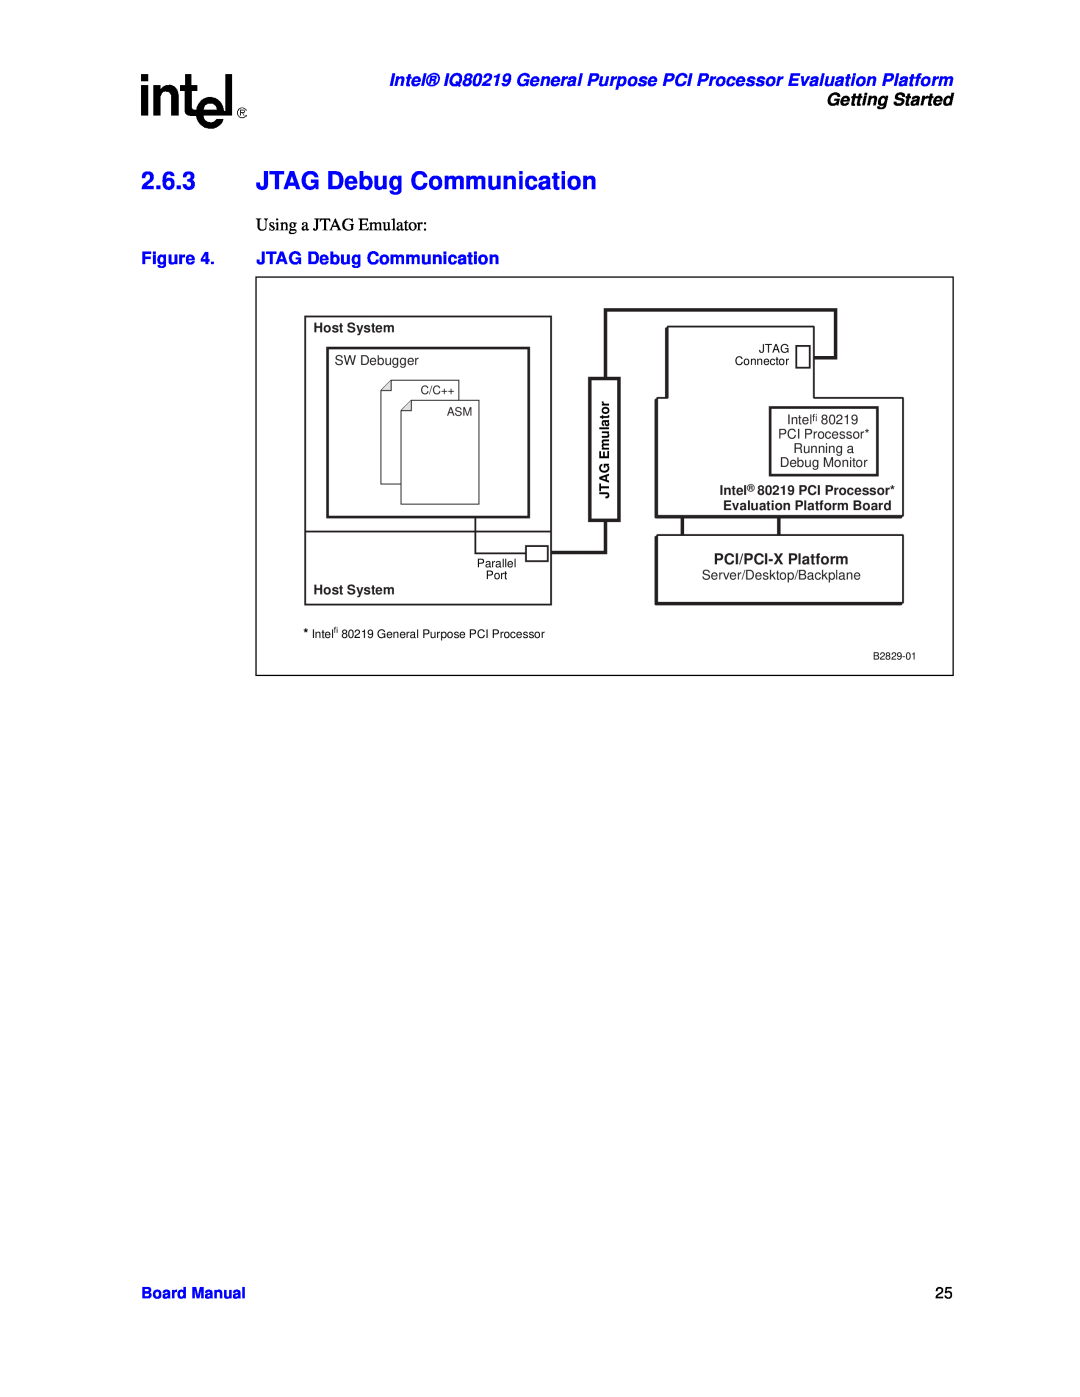 Intel JTAG Debug Communication, Intel IQ80219 General Purpose PCI Processor Evaluation Platform, Getting Started, C/C++ 